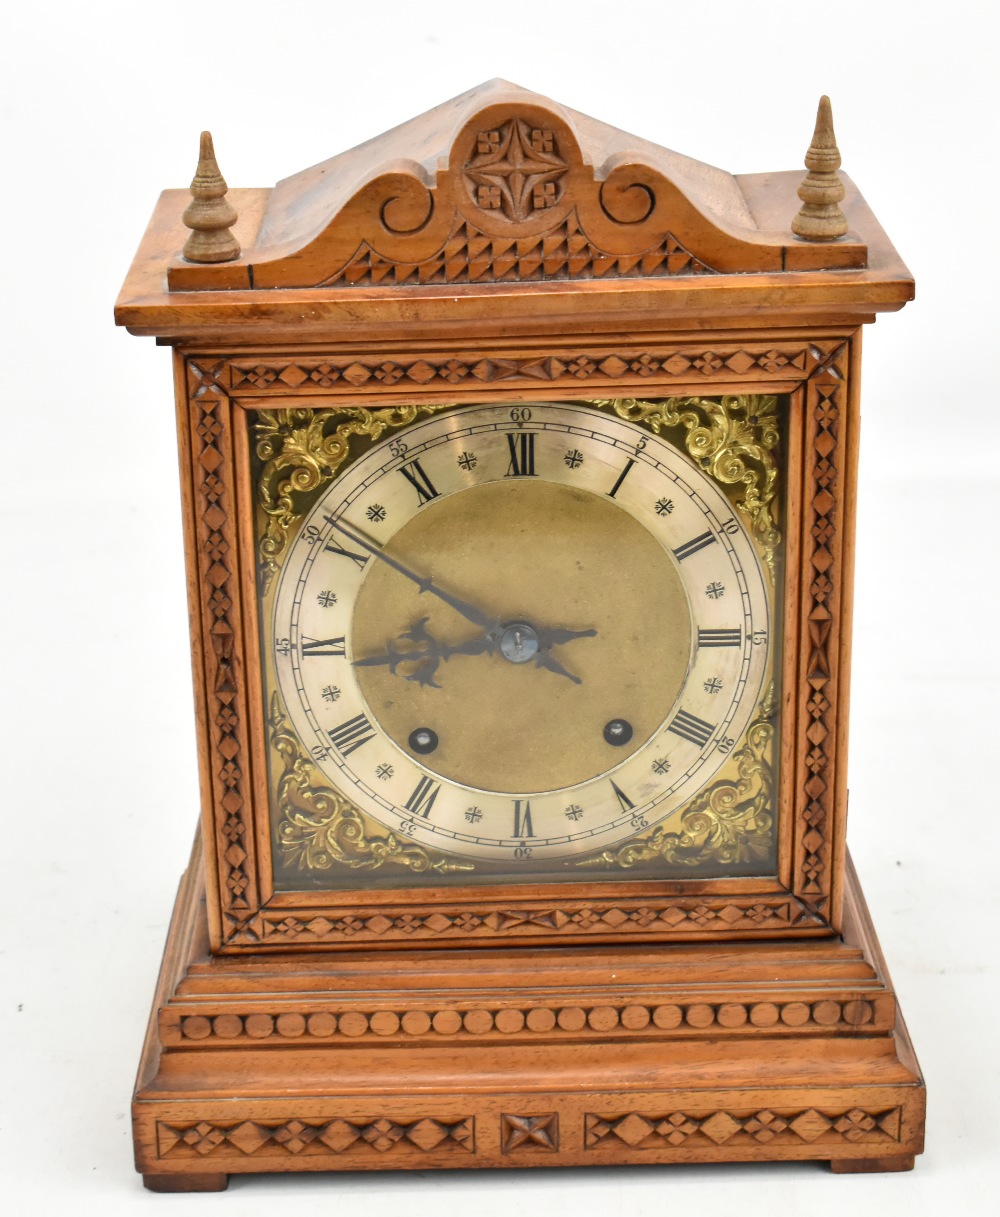 WINTERHALDER & HOFMEIER; a circa 1900 German walnut mantel clock with carved detail, the silvered